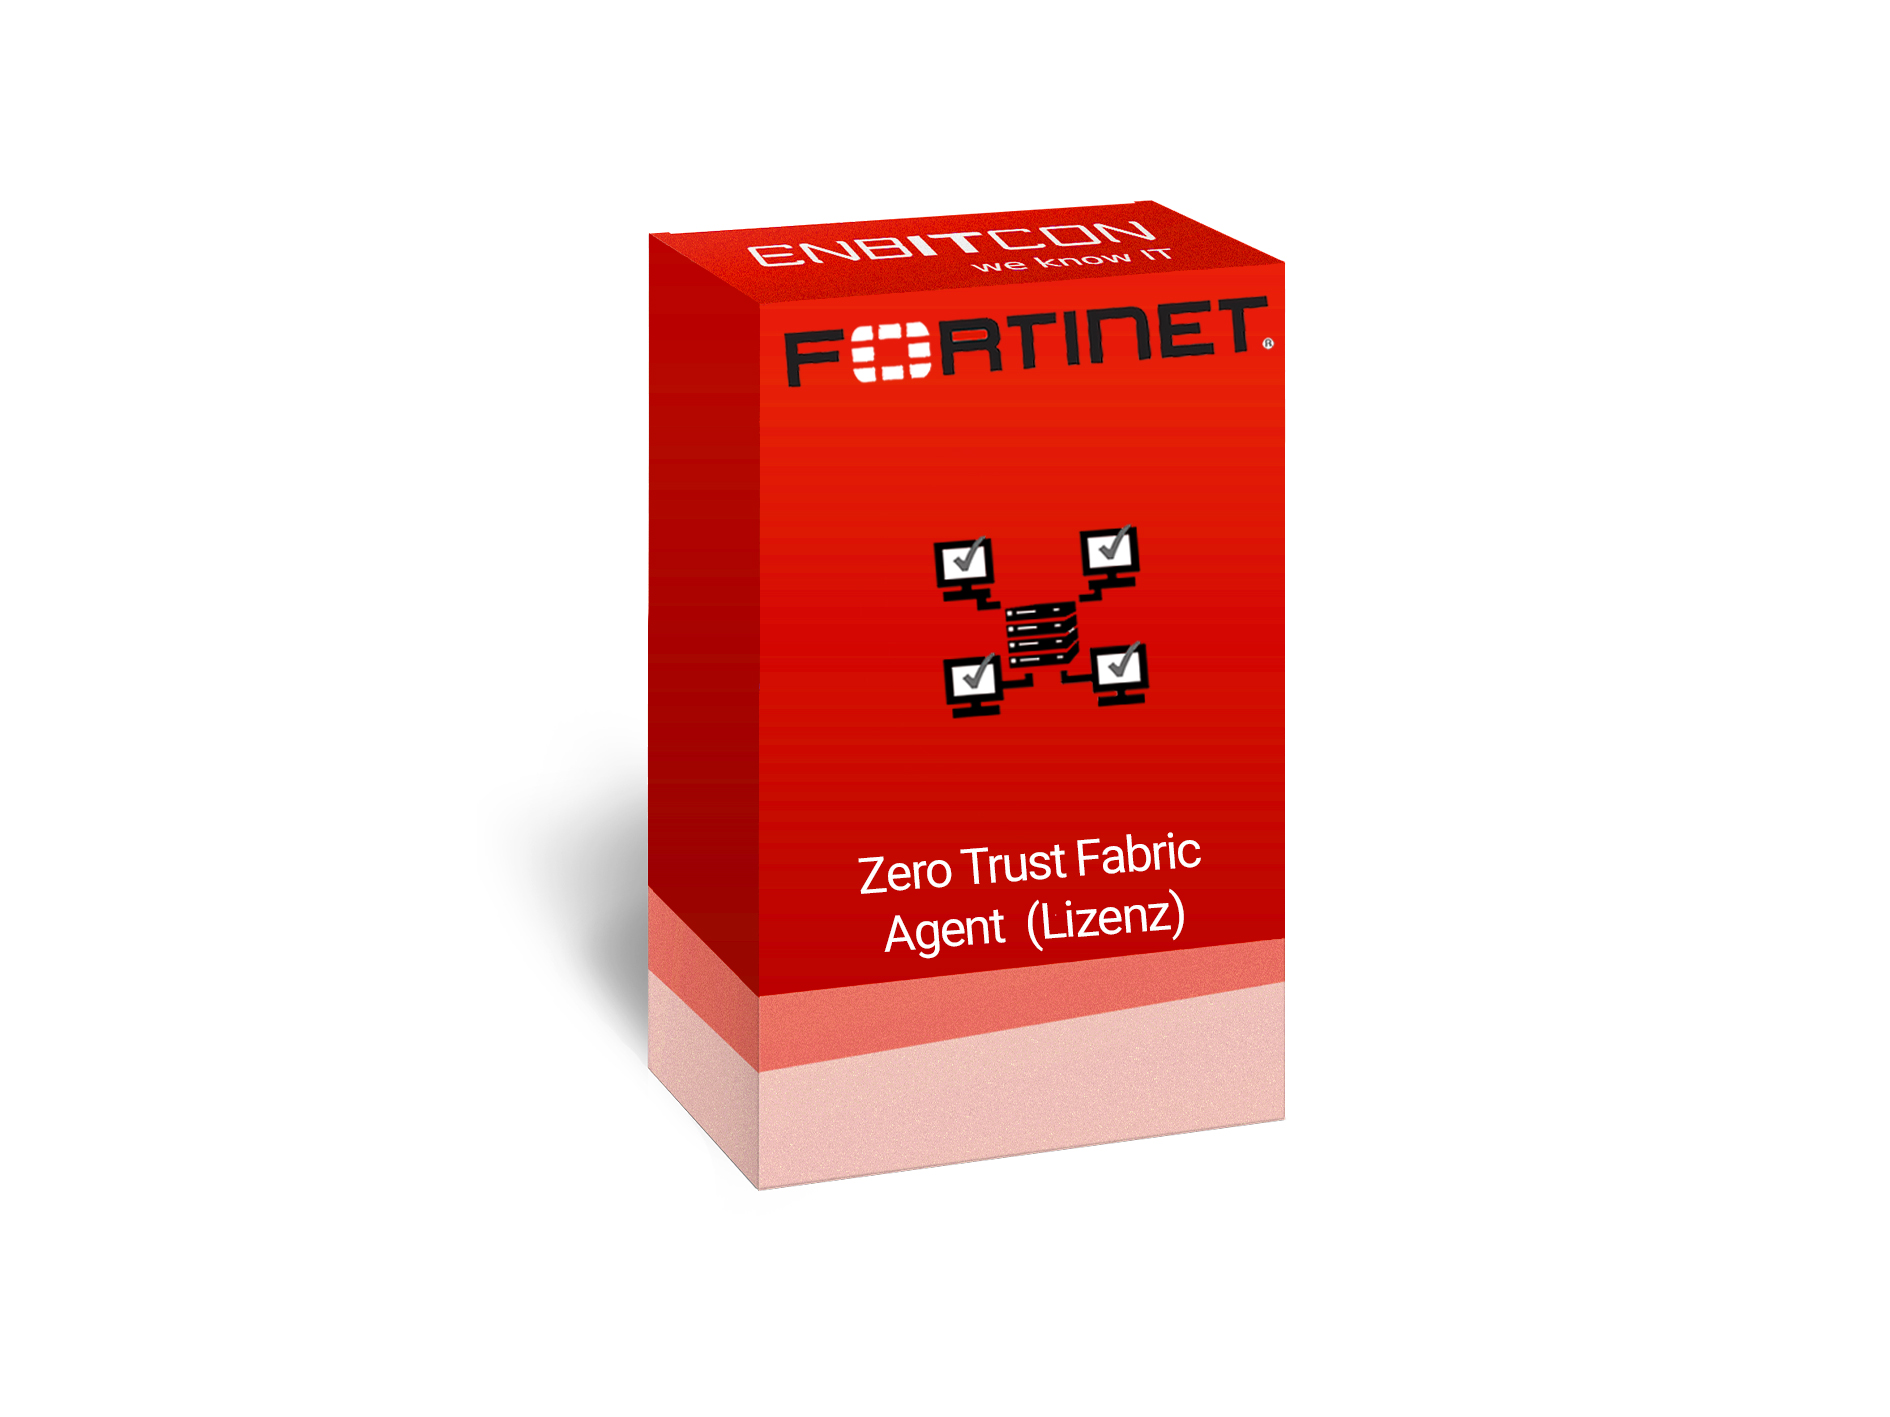 FortiClient Zero Trust Fabric Agent (On Prem)